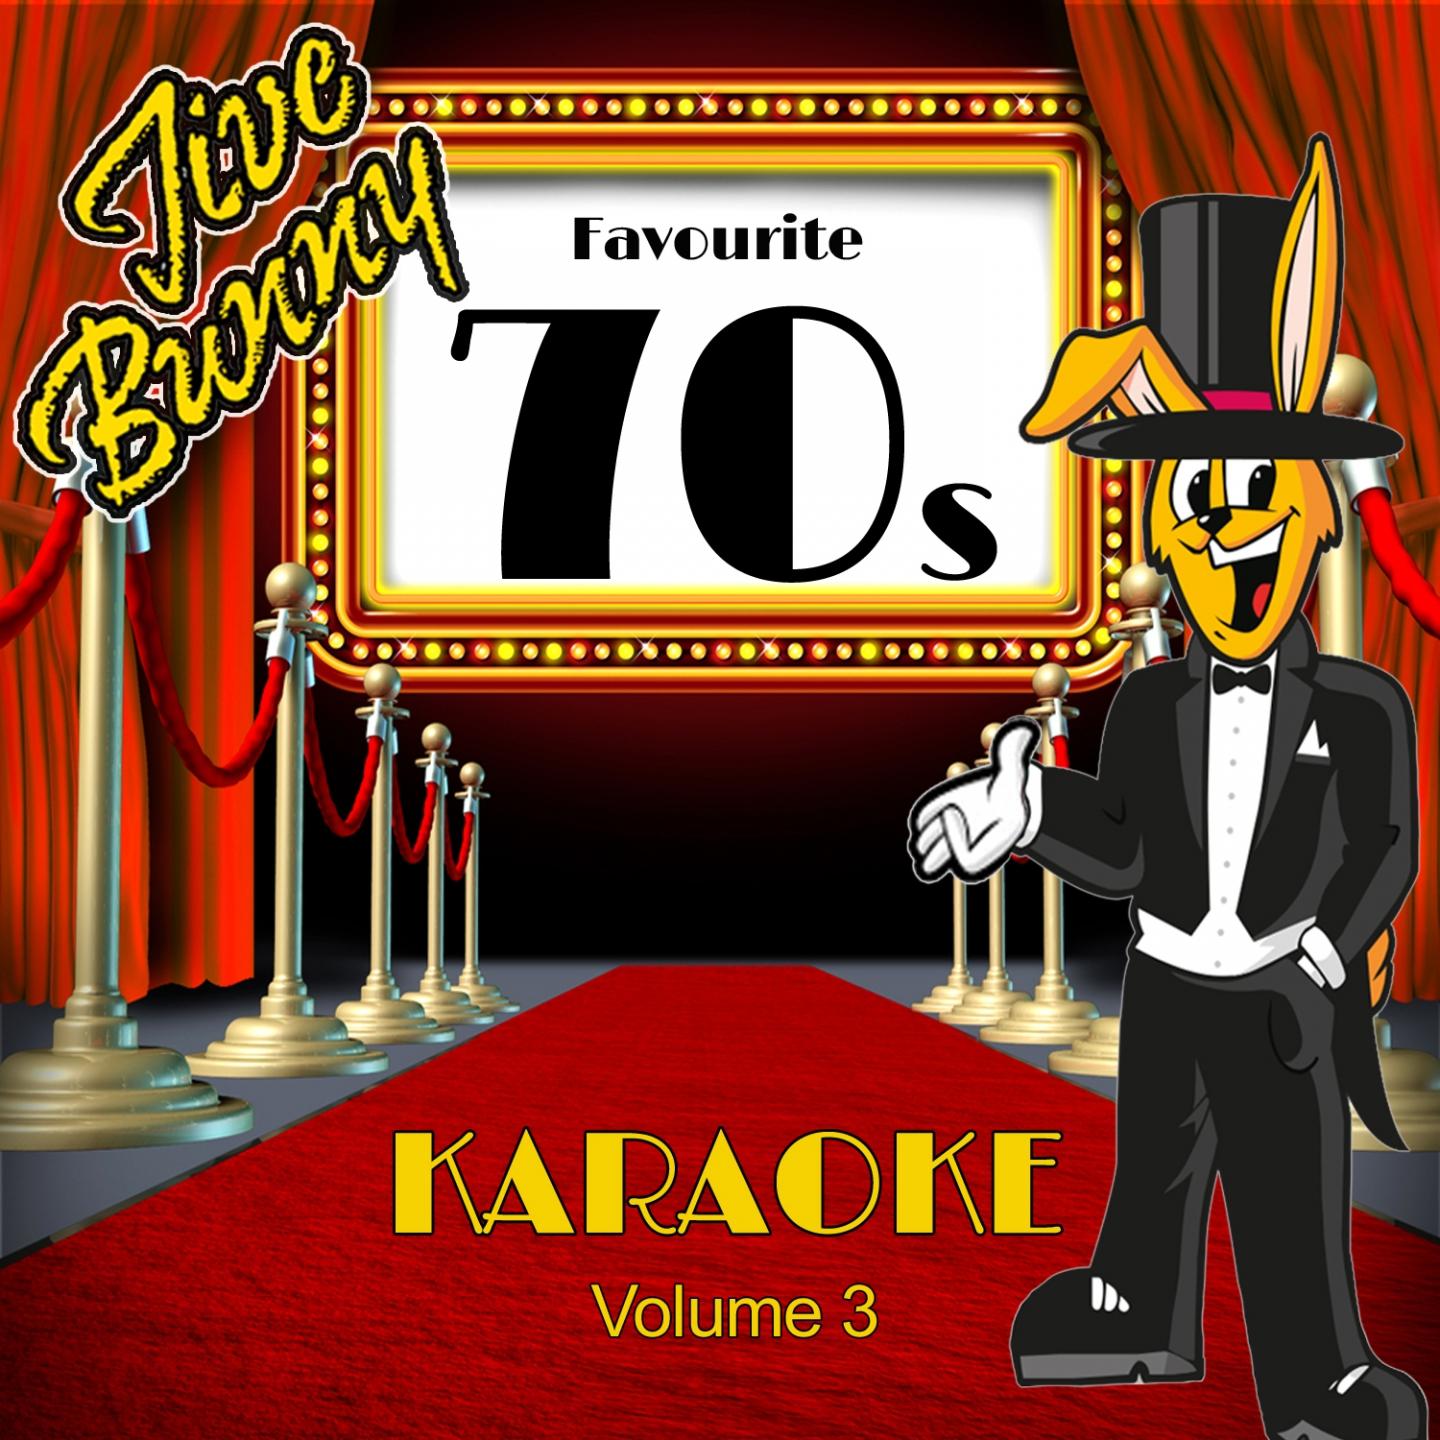 Jive Bunny's Favourite 70's Album - Karaoke, Vol. 3